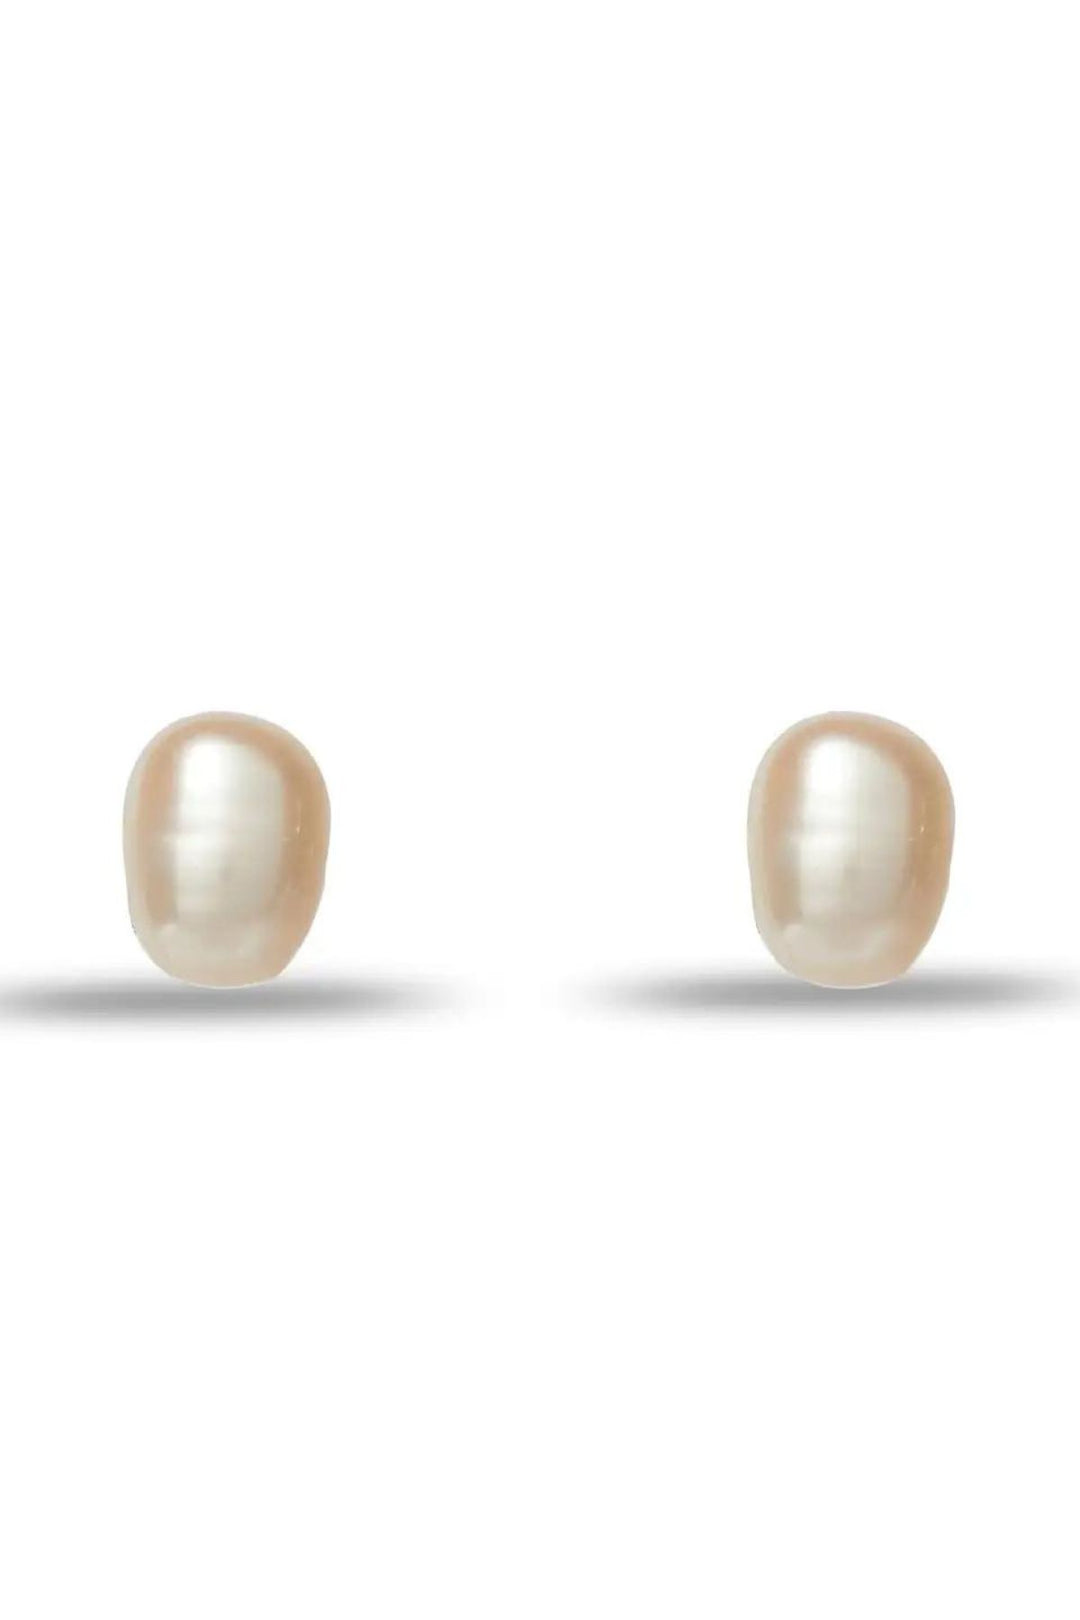 LELE SADOUGHI: Pearl Freshwater Pearl Stud Earrings